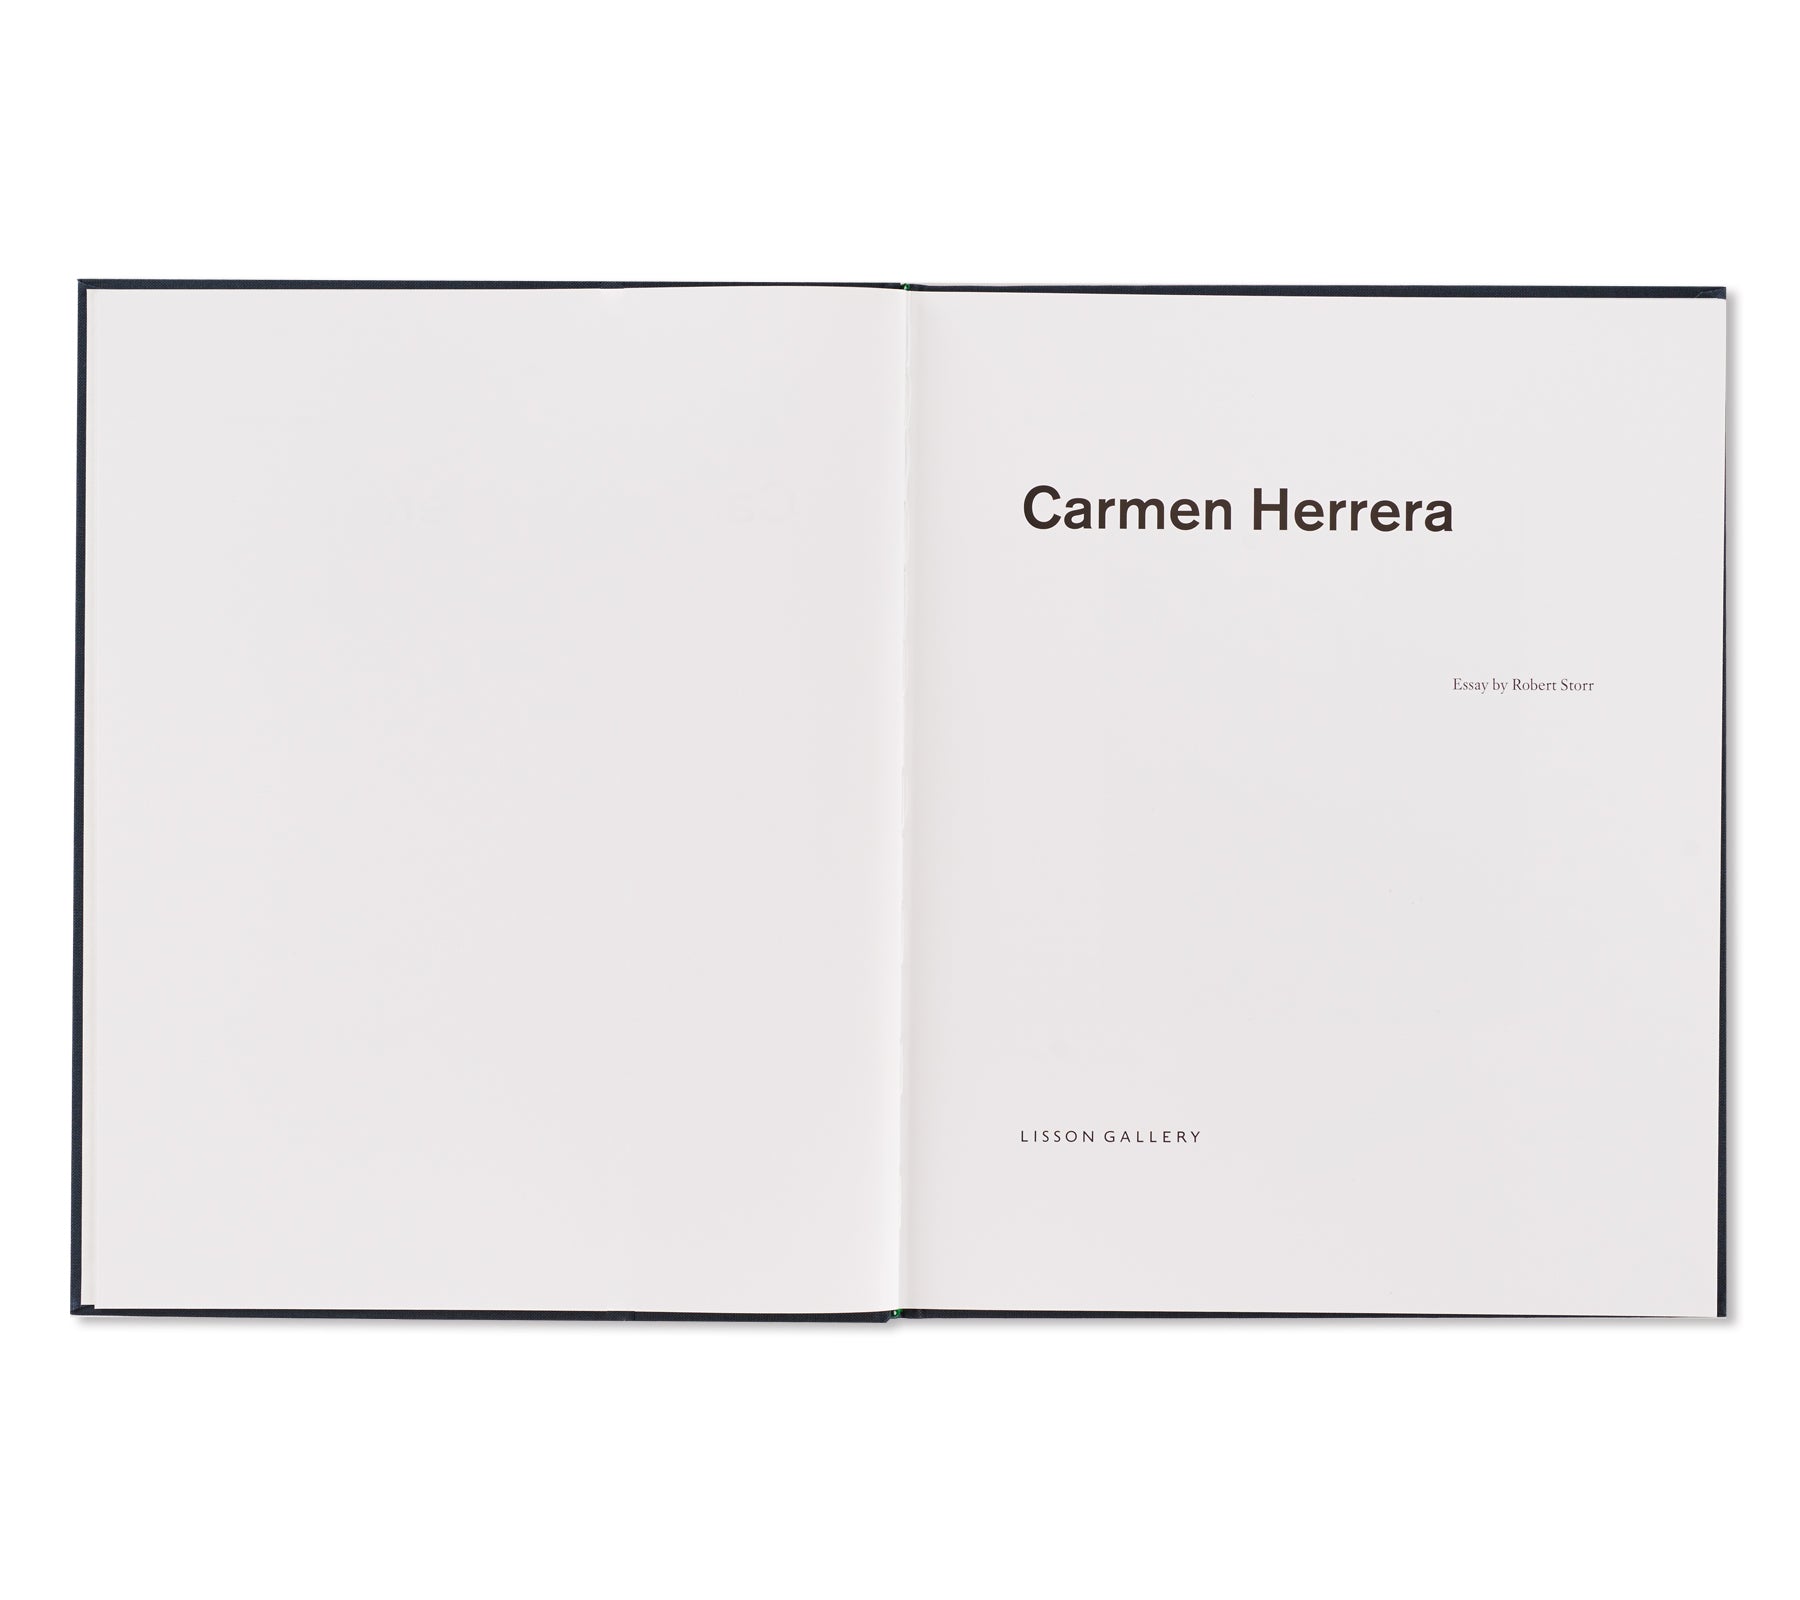 CARMEN HERRERA by Carmen Herrera